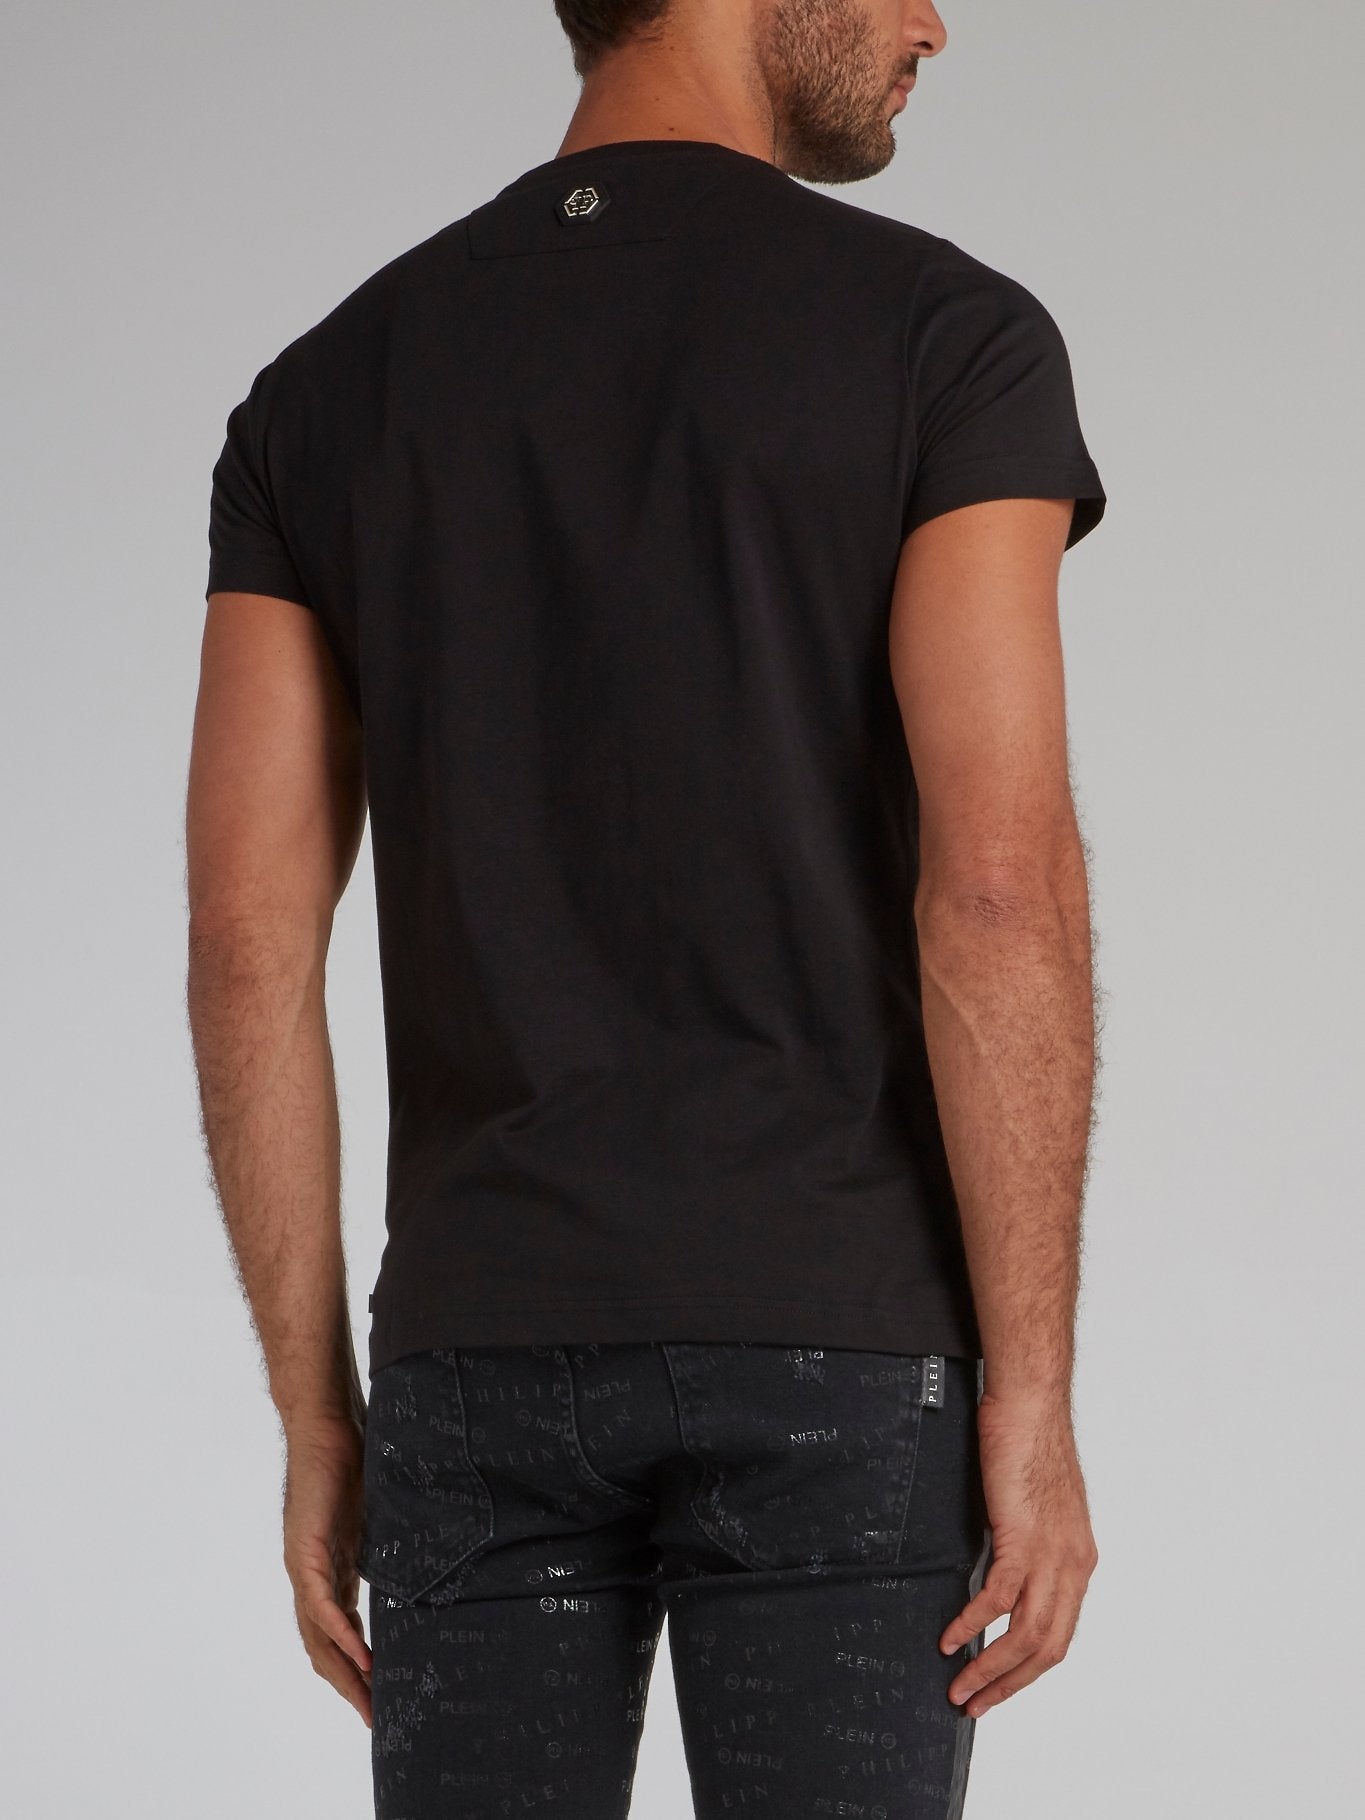 Scarface Black Printed T-Shirt